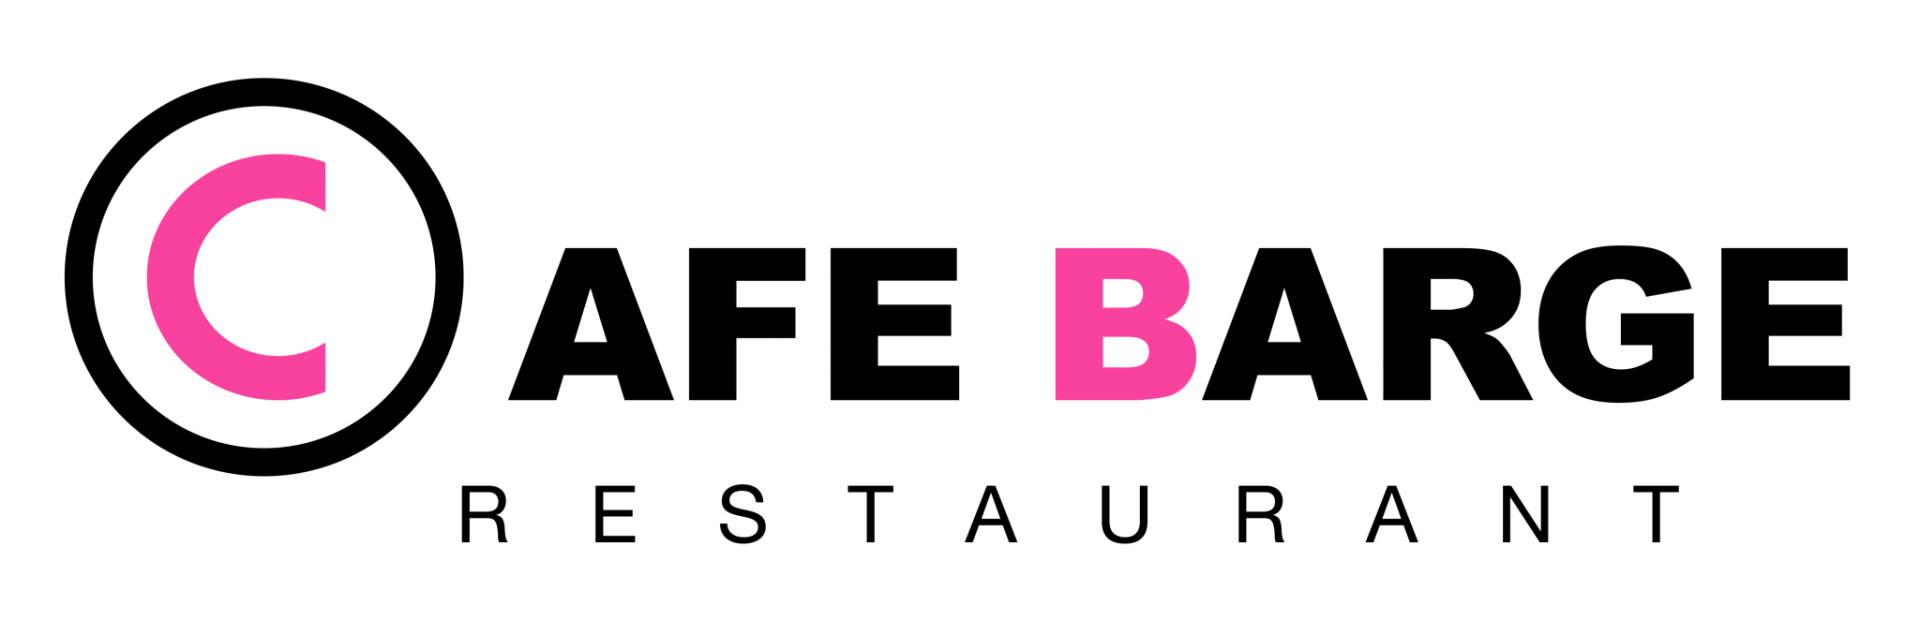 Logo Café Barge RESTAURANT